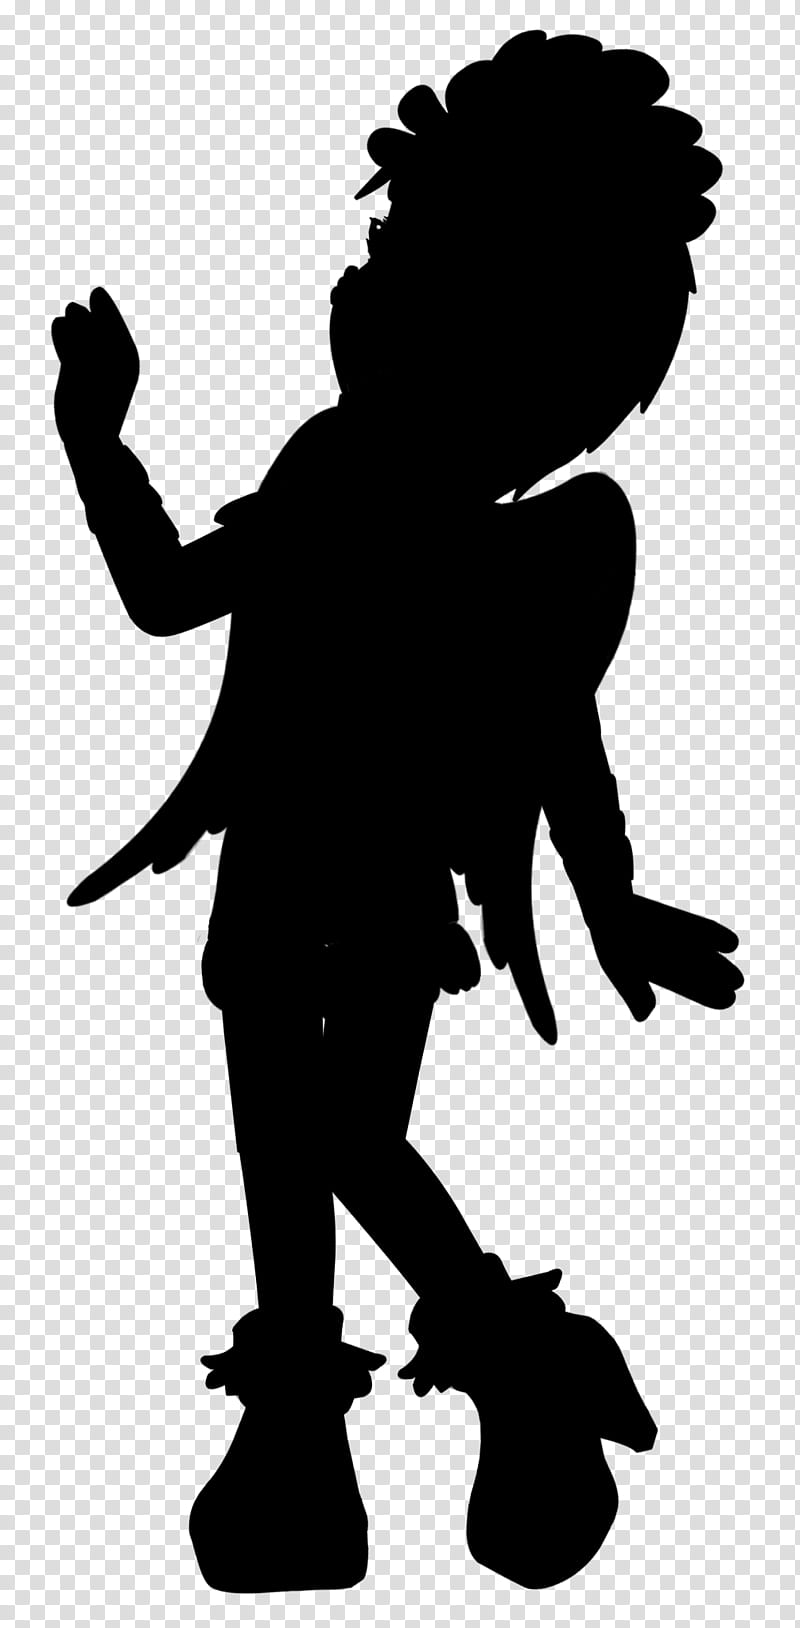 Character Silhouette, Male, Human, Behavior, Black M, Blackandwhite, Skateboarding transparent background PNG clipart